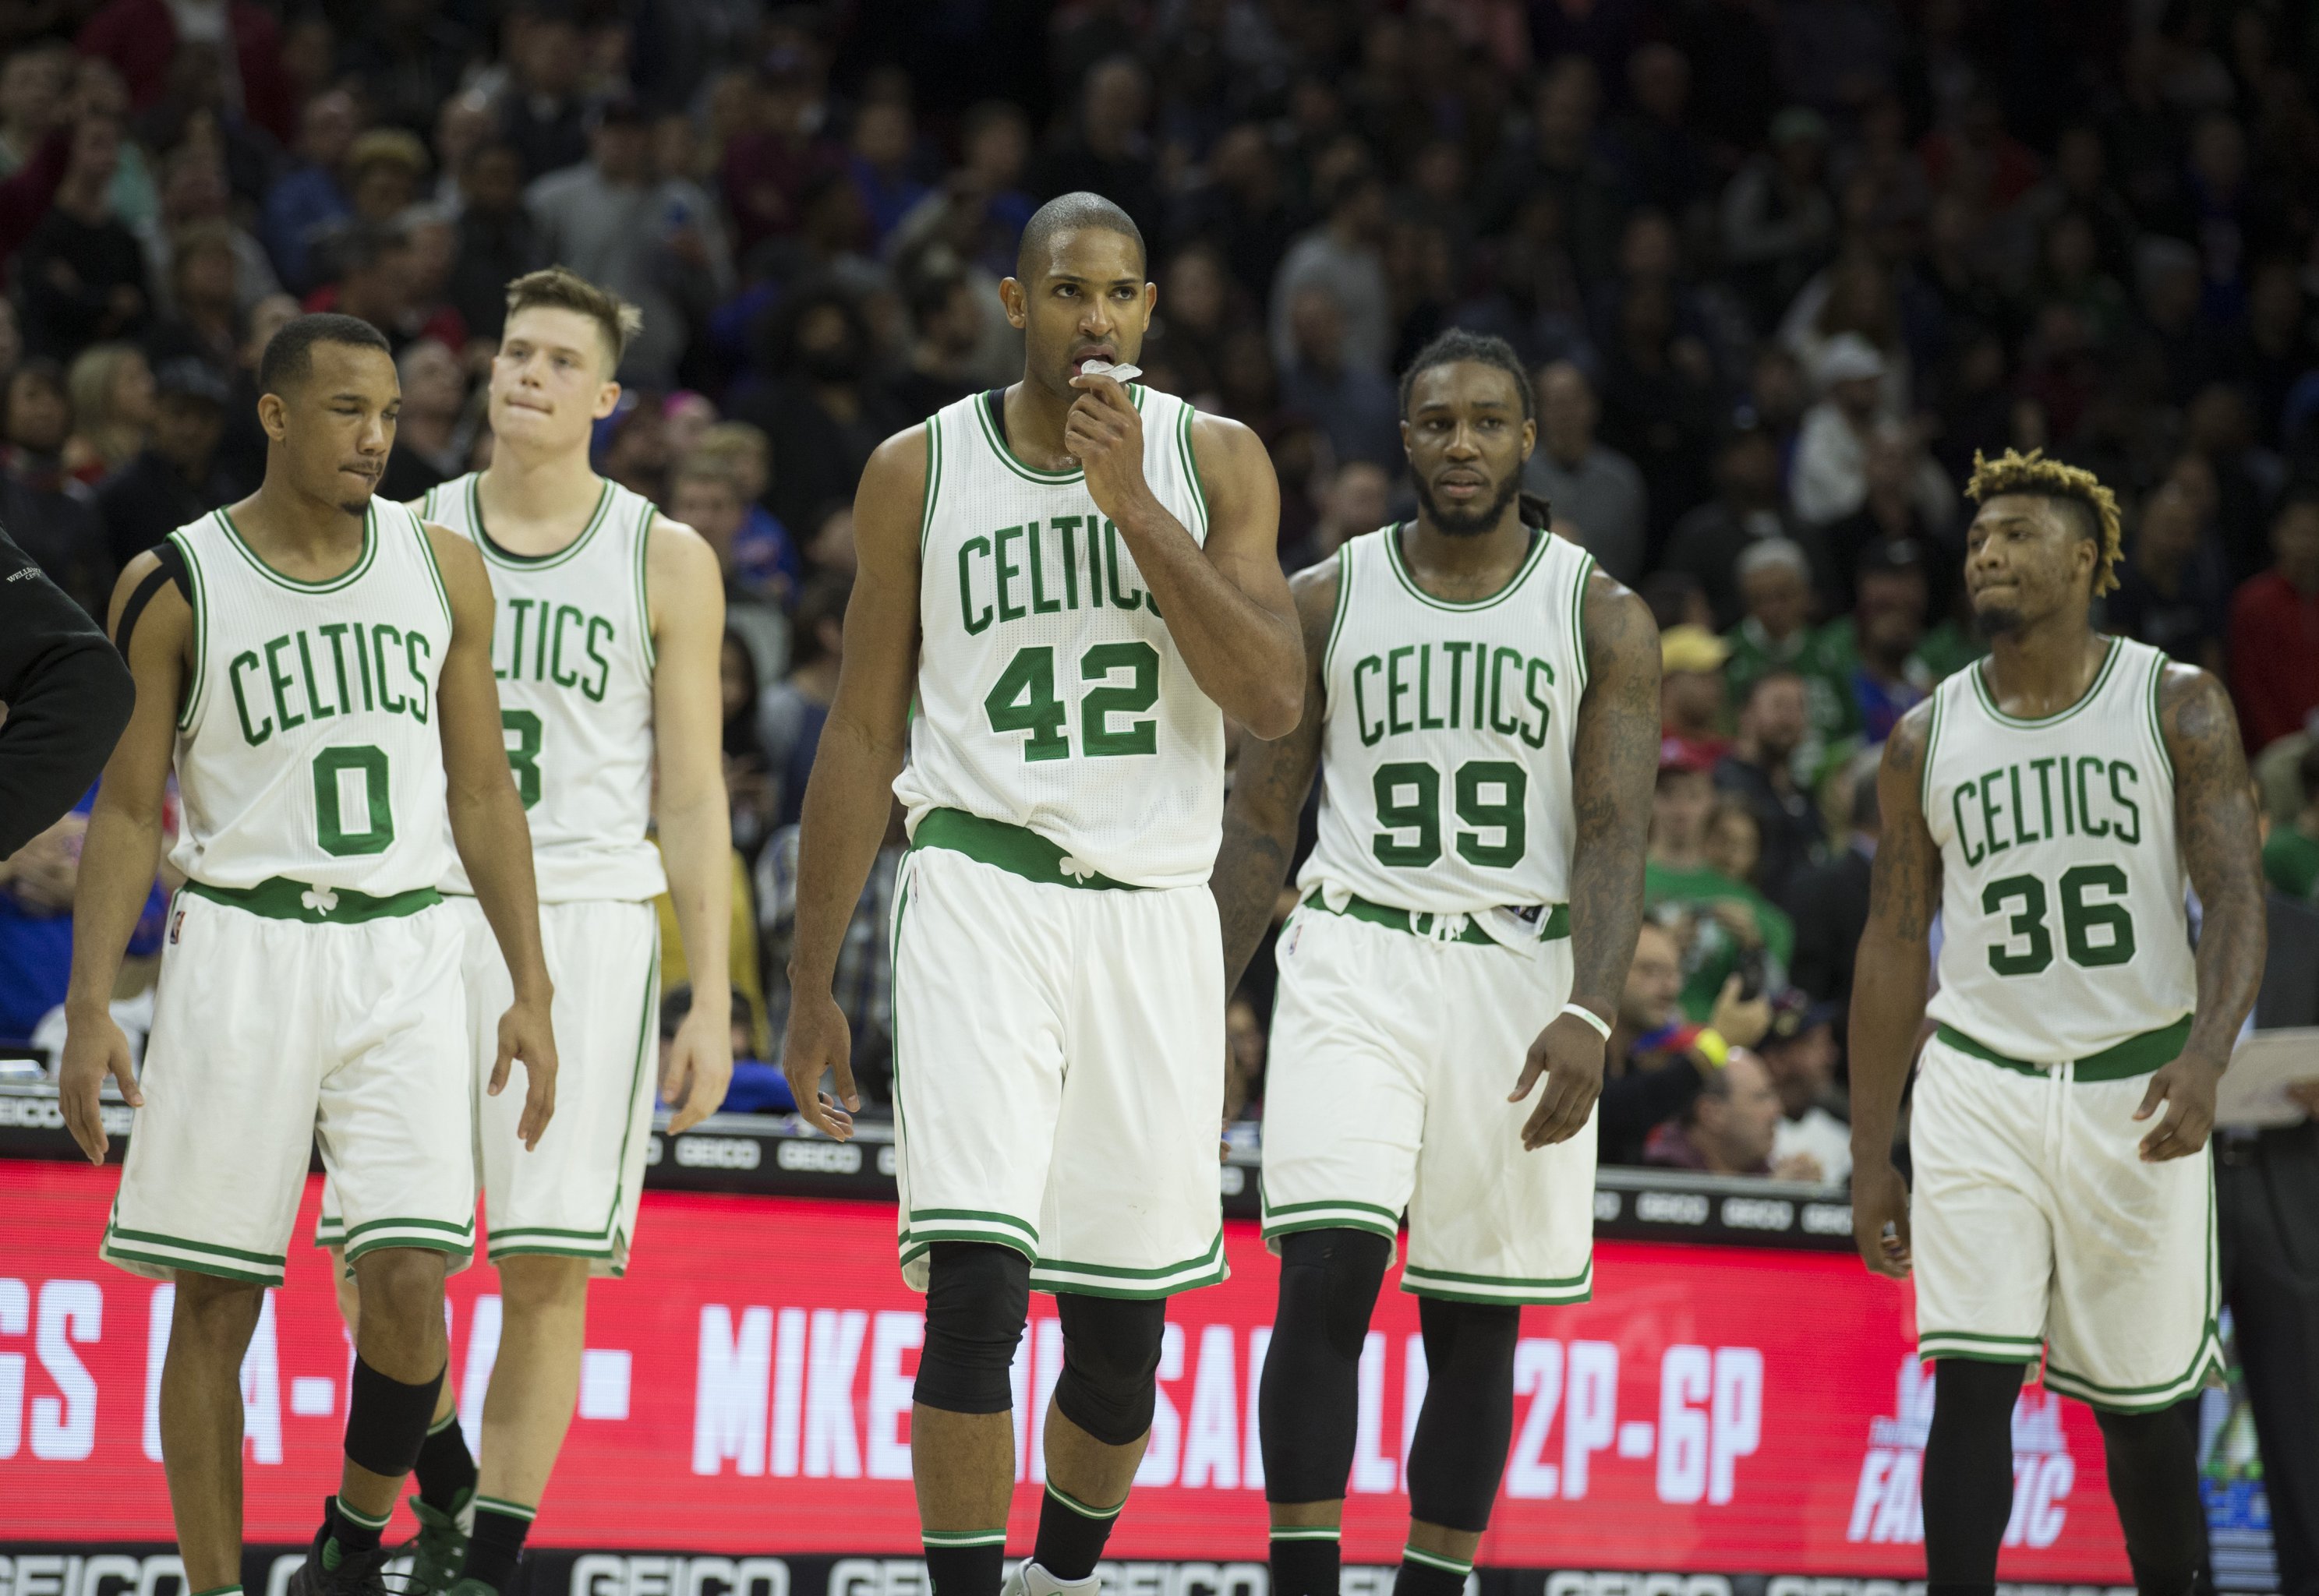 Boston Celtics Dream Big - Image 10 from Designers Pitch Black History Month  Jerseys to NBA